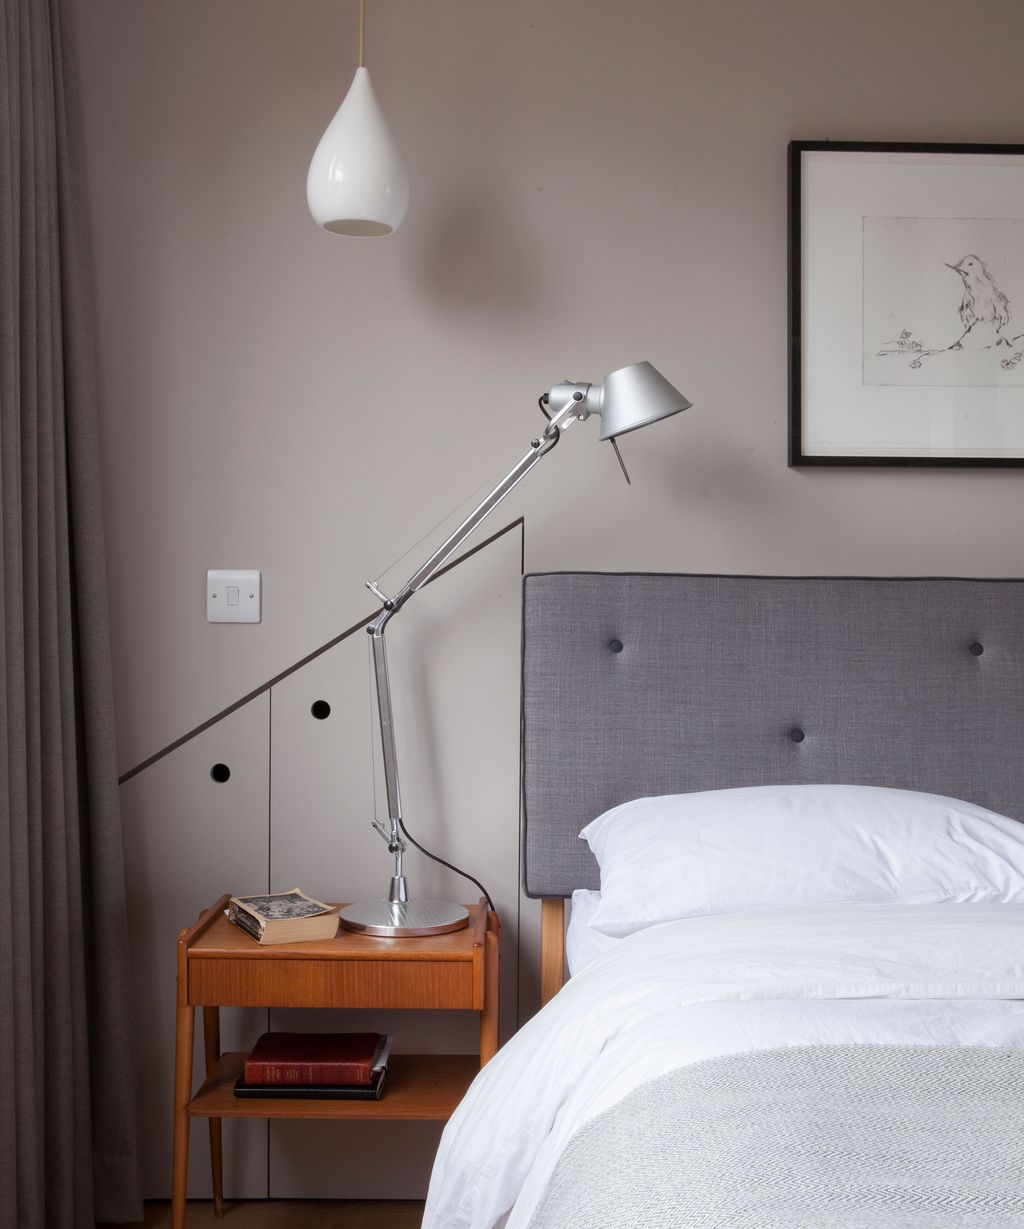 Bedroom lighting ideas: 23 clever ways to light your room